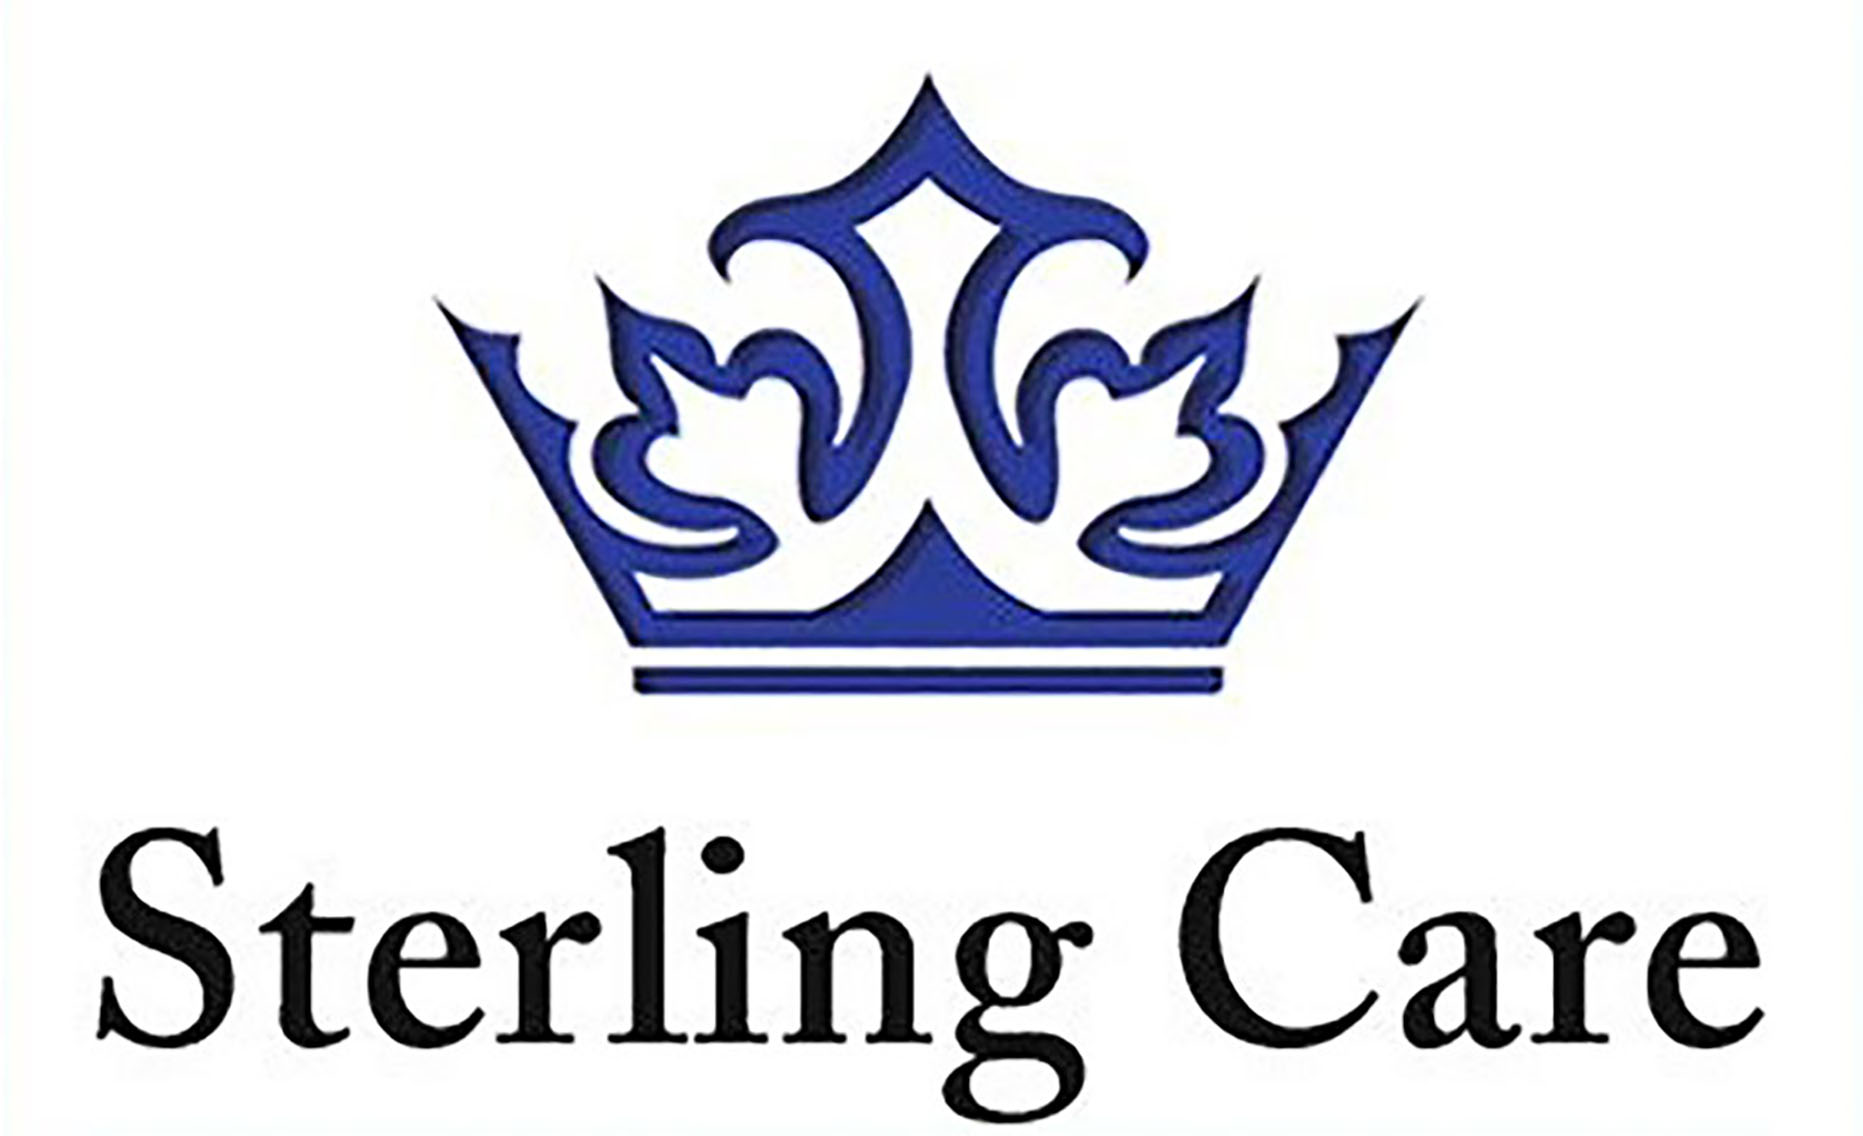 sterling-care-logo-2